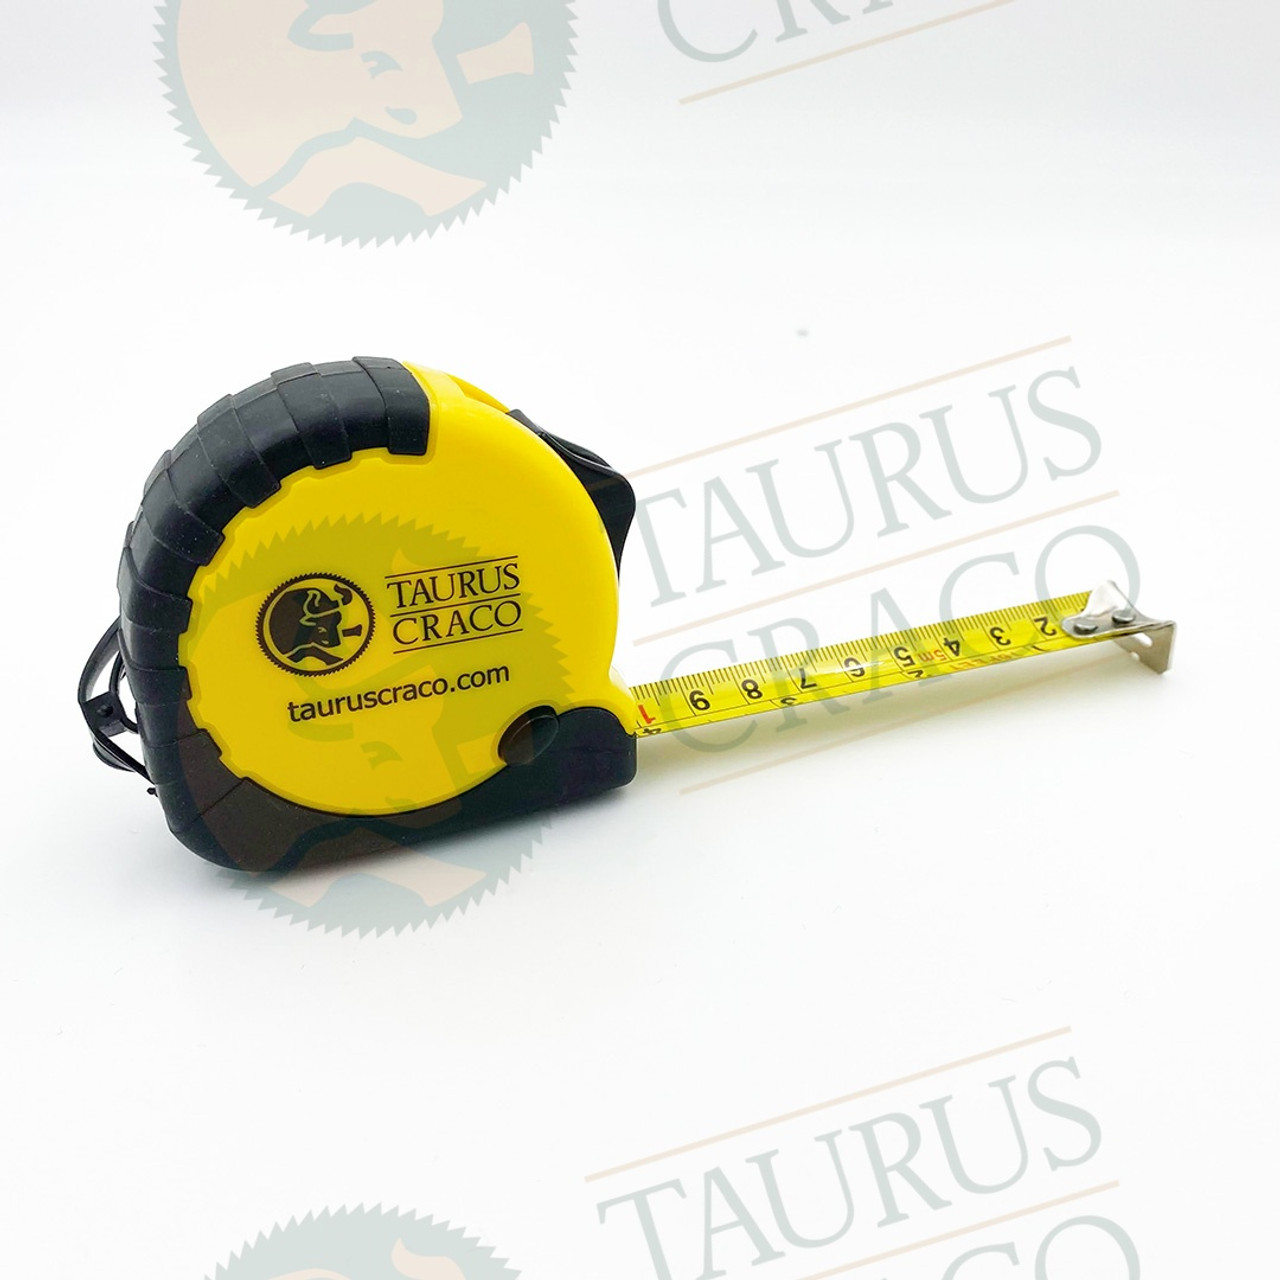 Image of Taurus Craco measuring tape